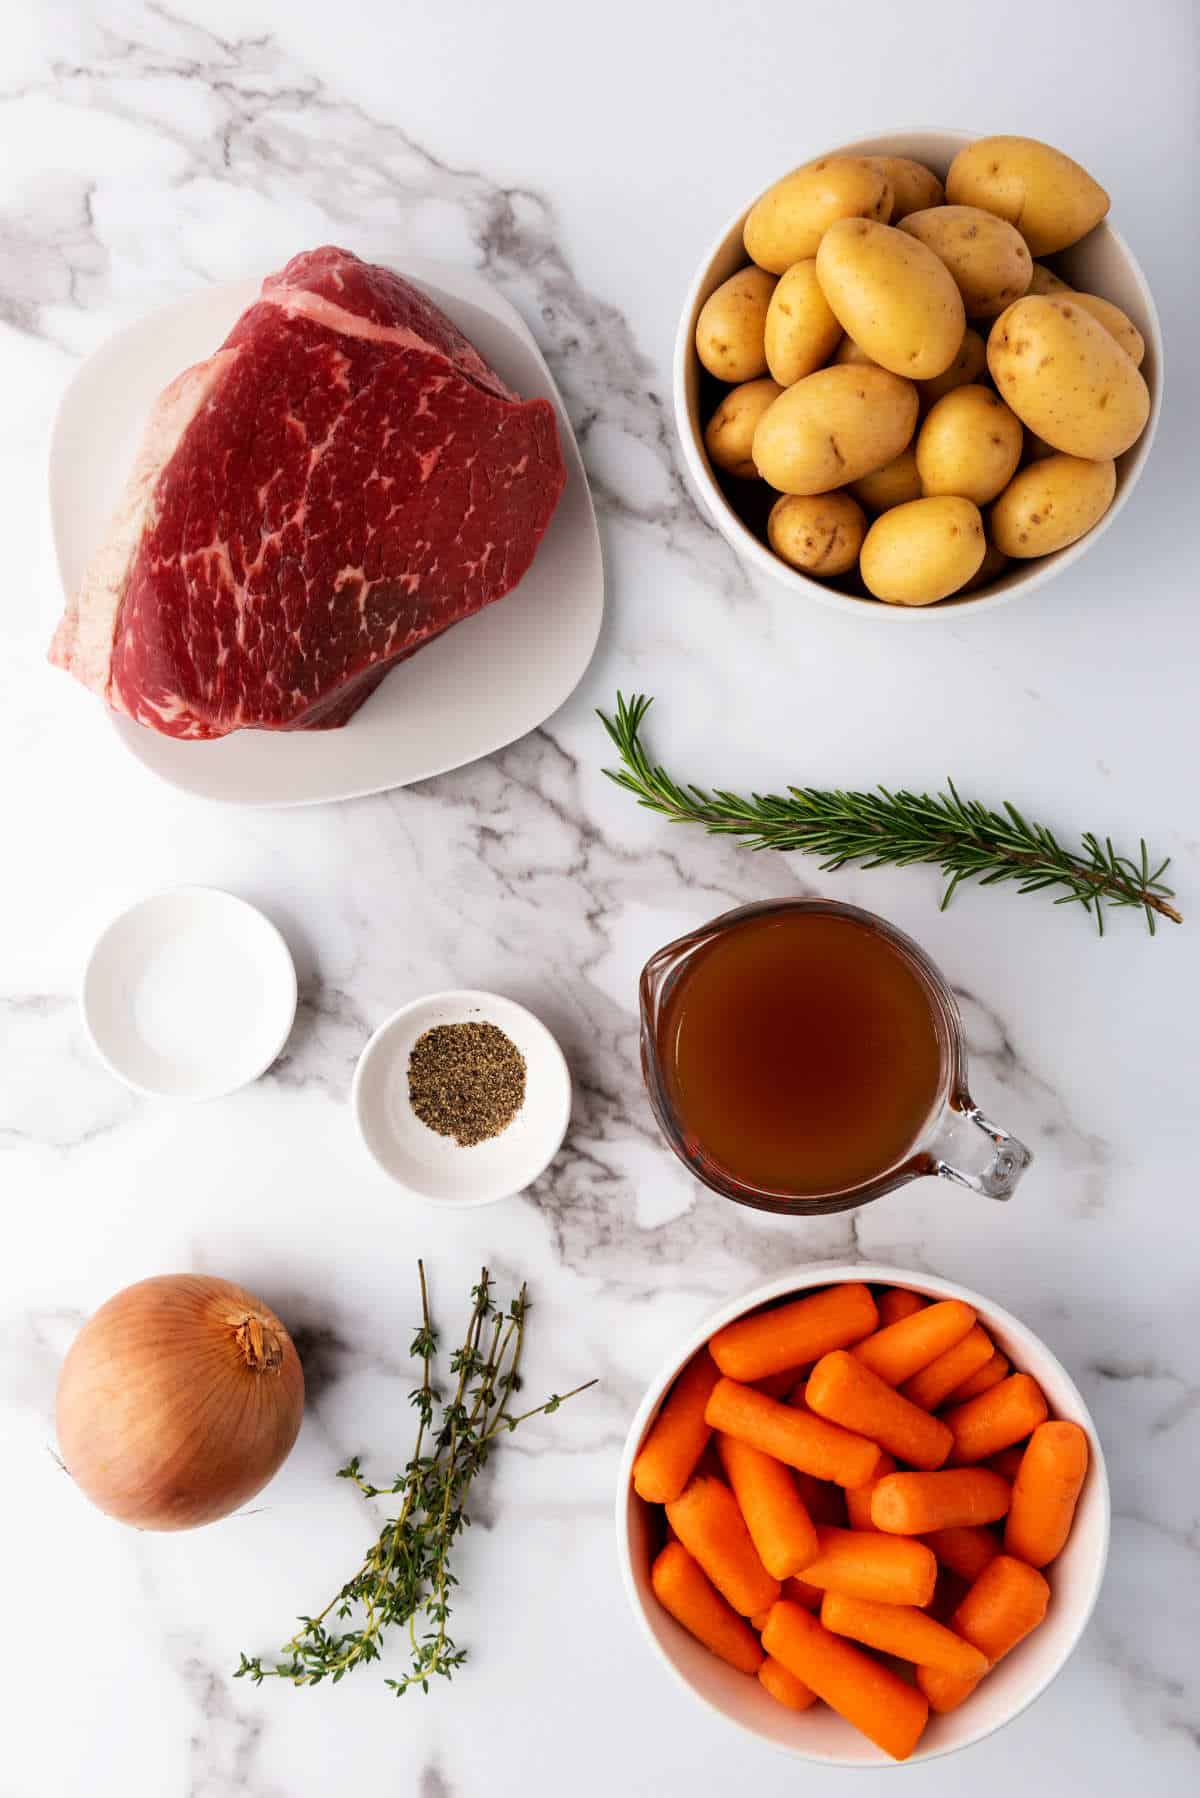 rump roast, potatoes, carrots, onion, herbs, seasonings, and broth on a white background.